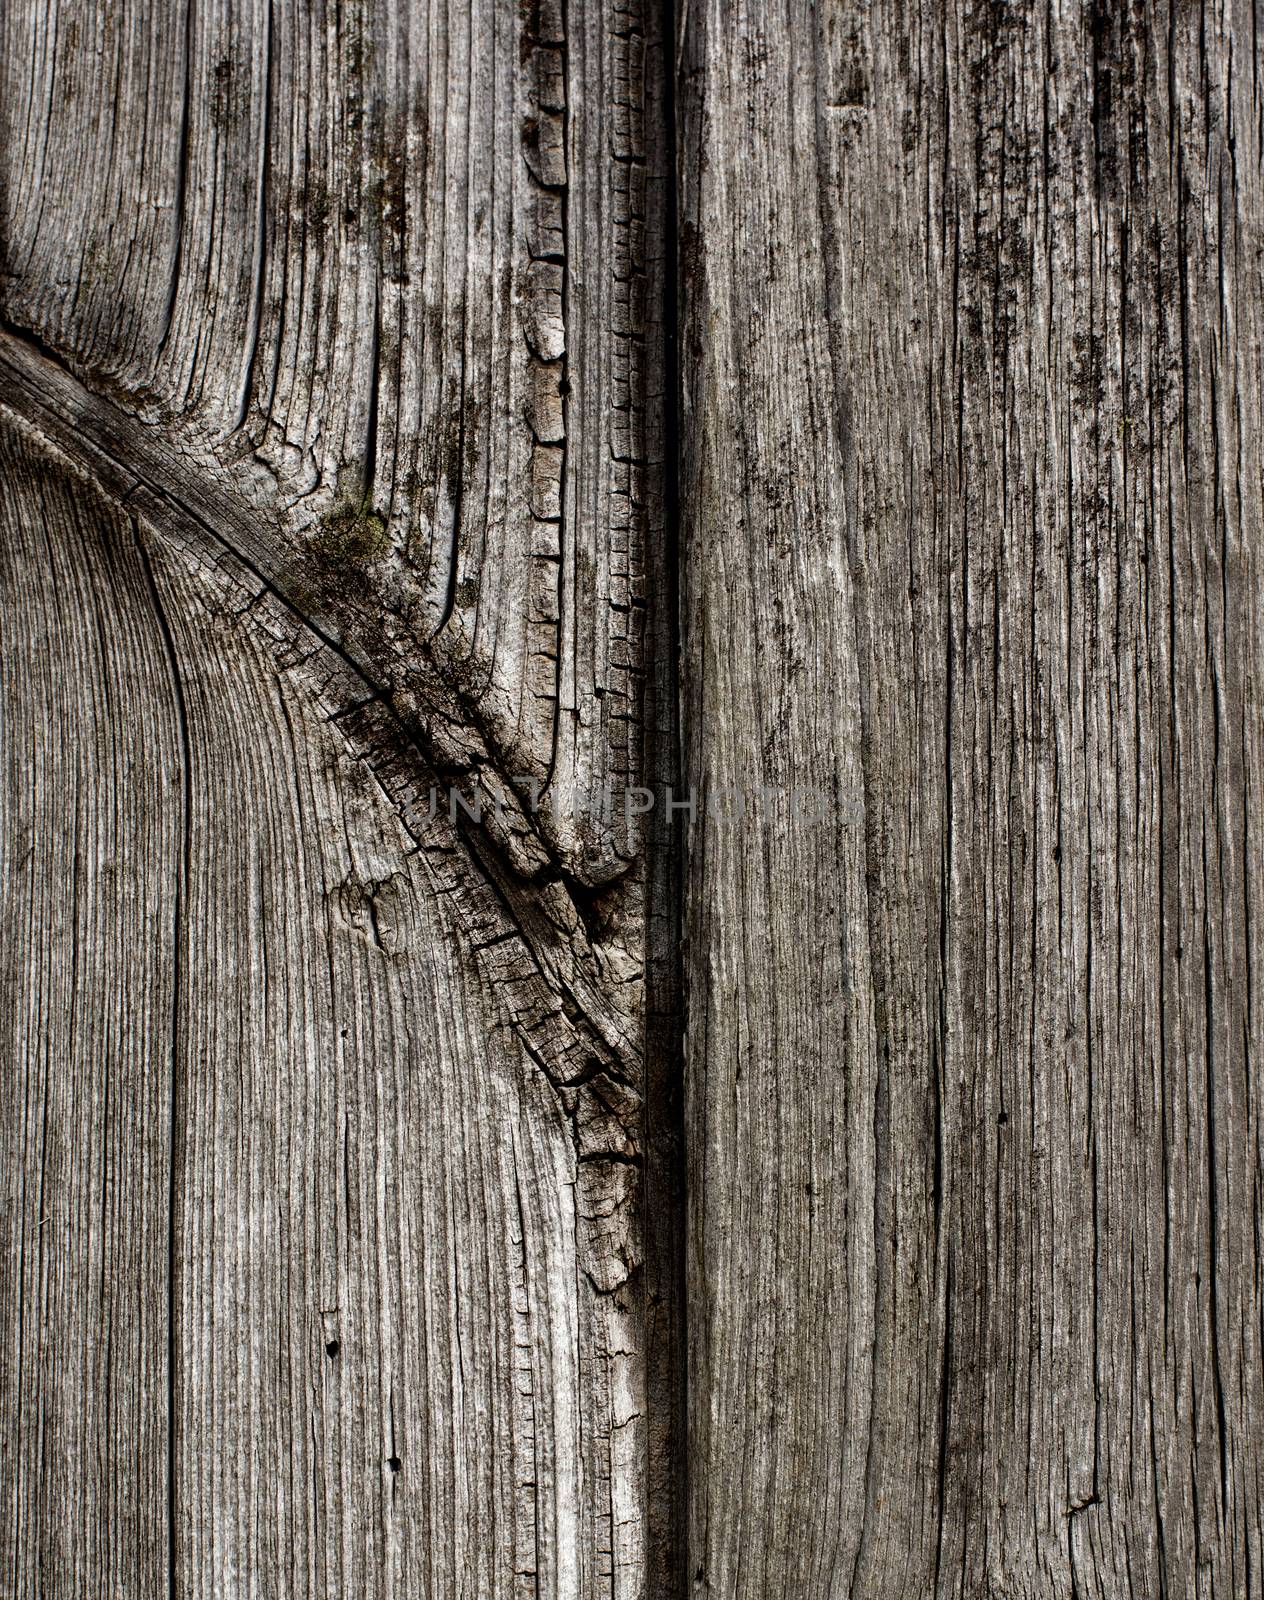 Cracked Wooden Background by zhekos